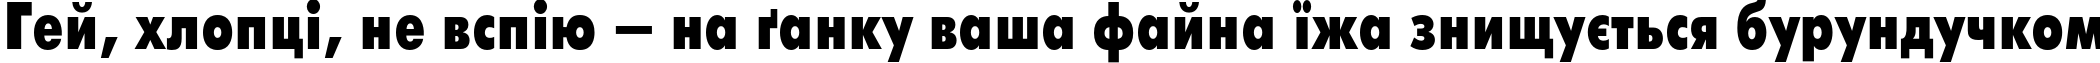 Пример написания шрифтом FuturisXCondC Bold текста на украинском